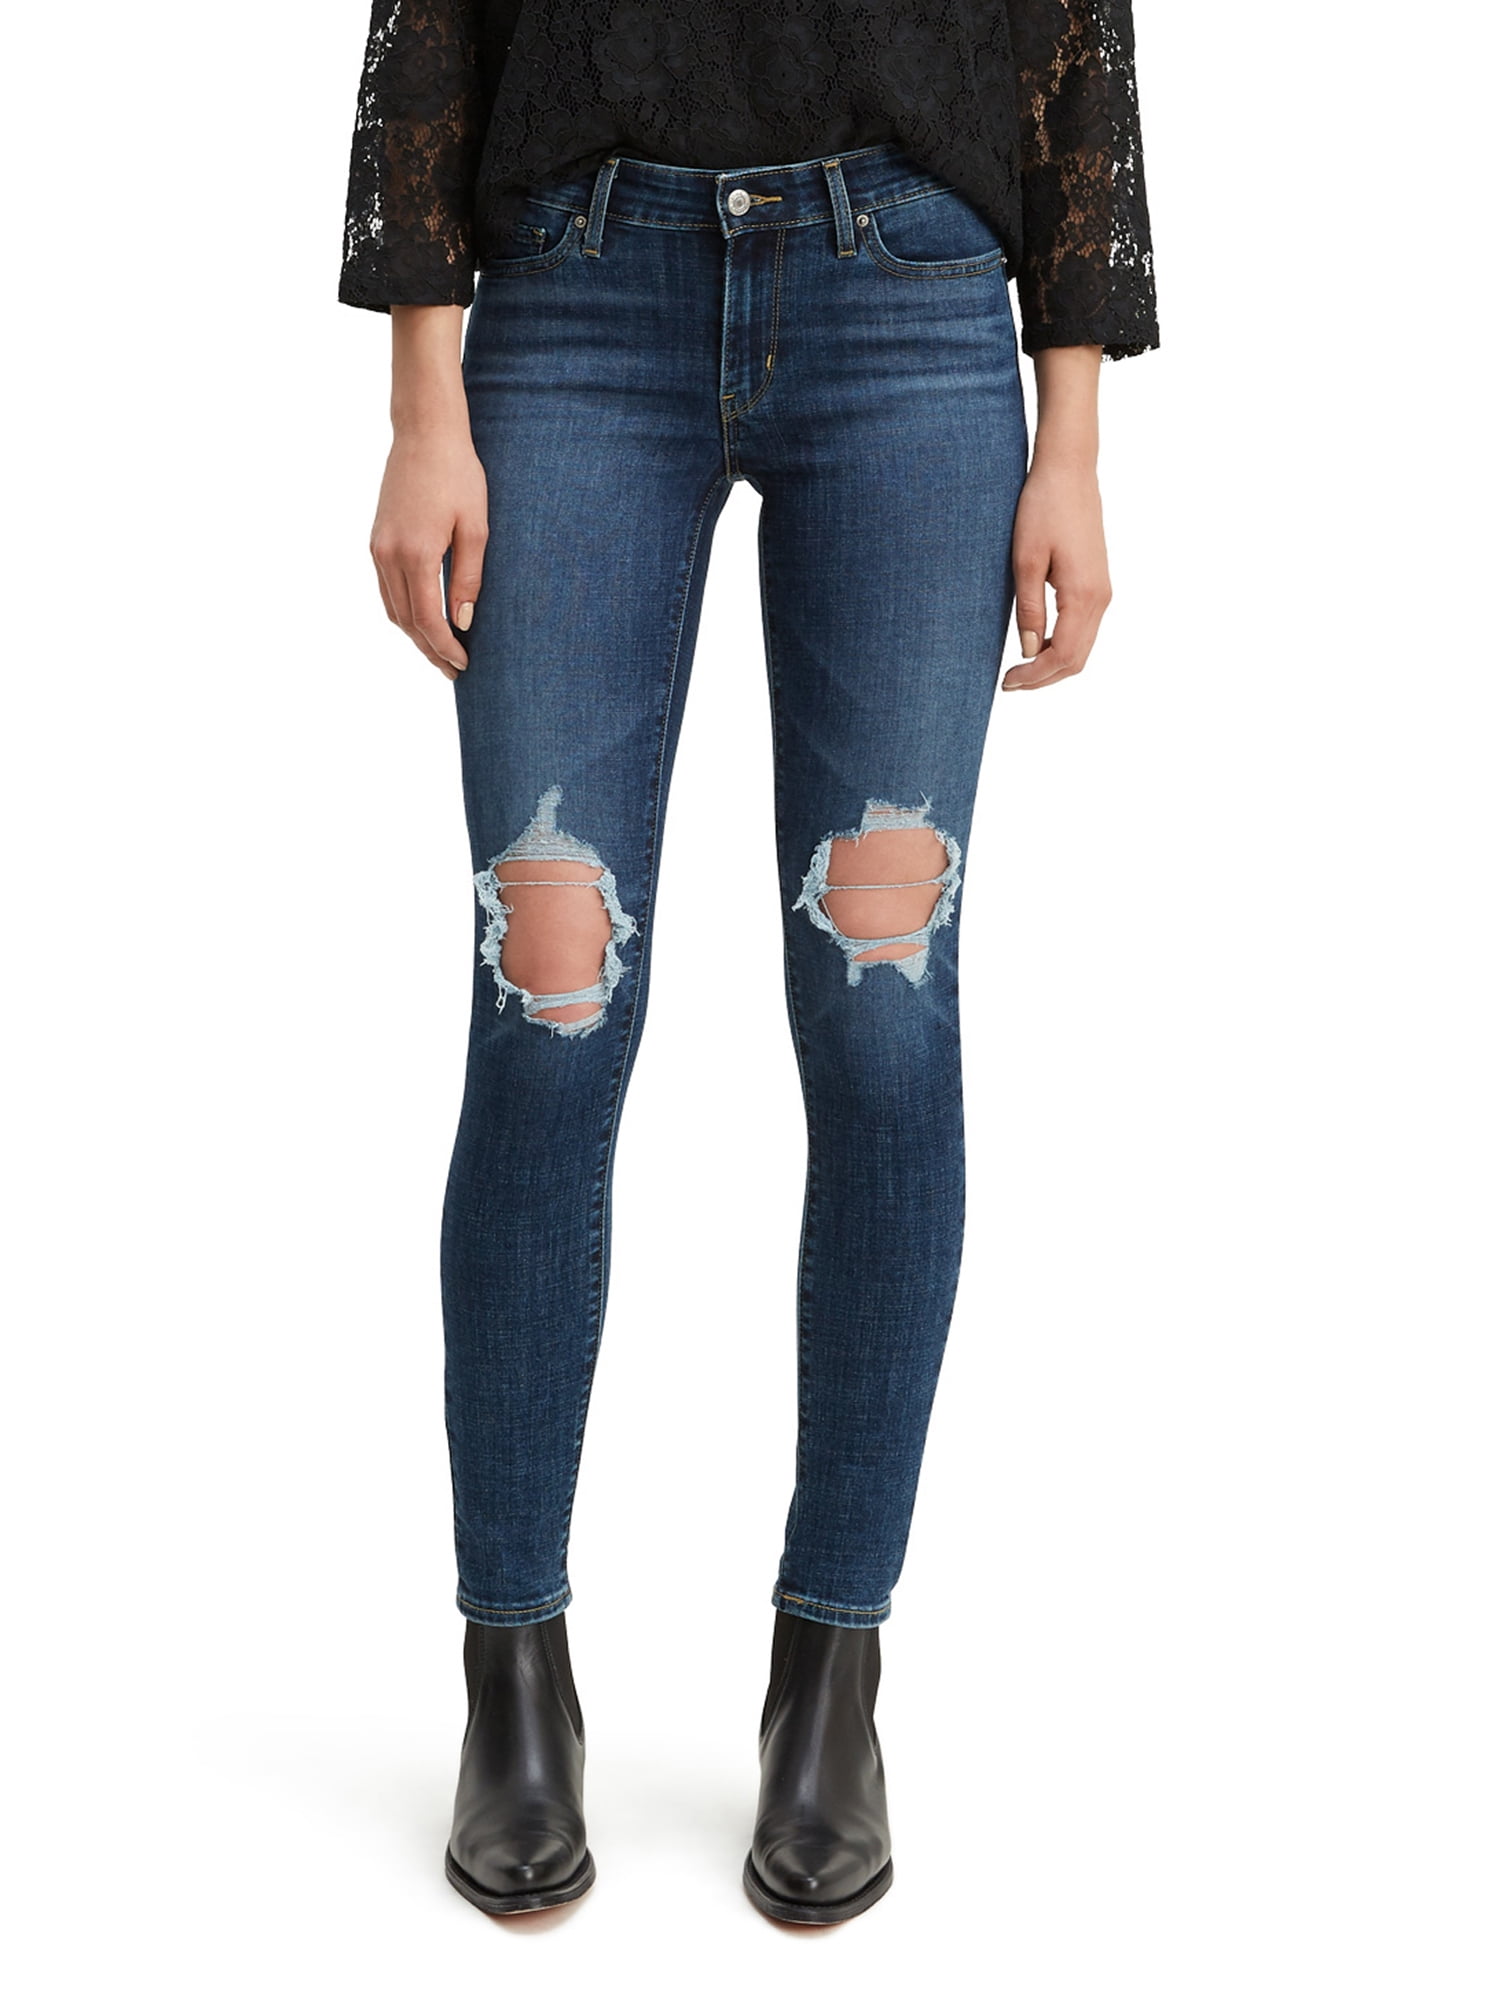 Levi's Original Women's 711 Skinny Jeans 